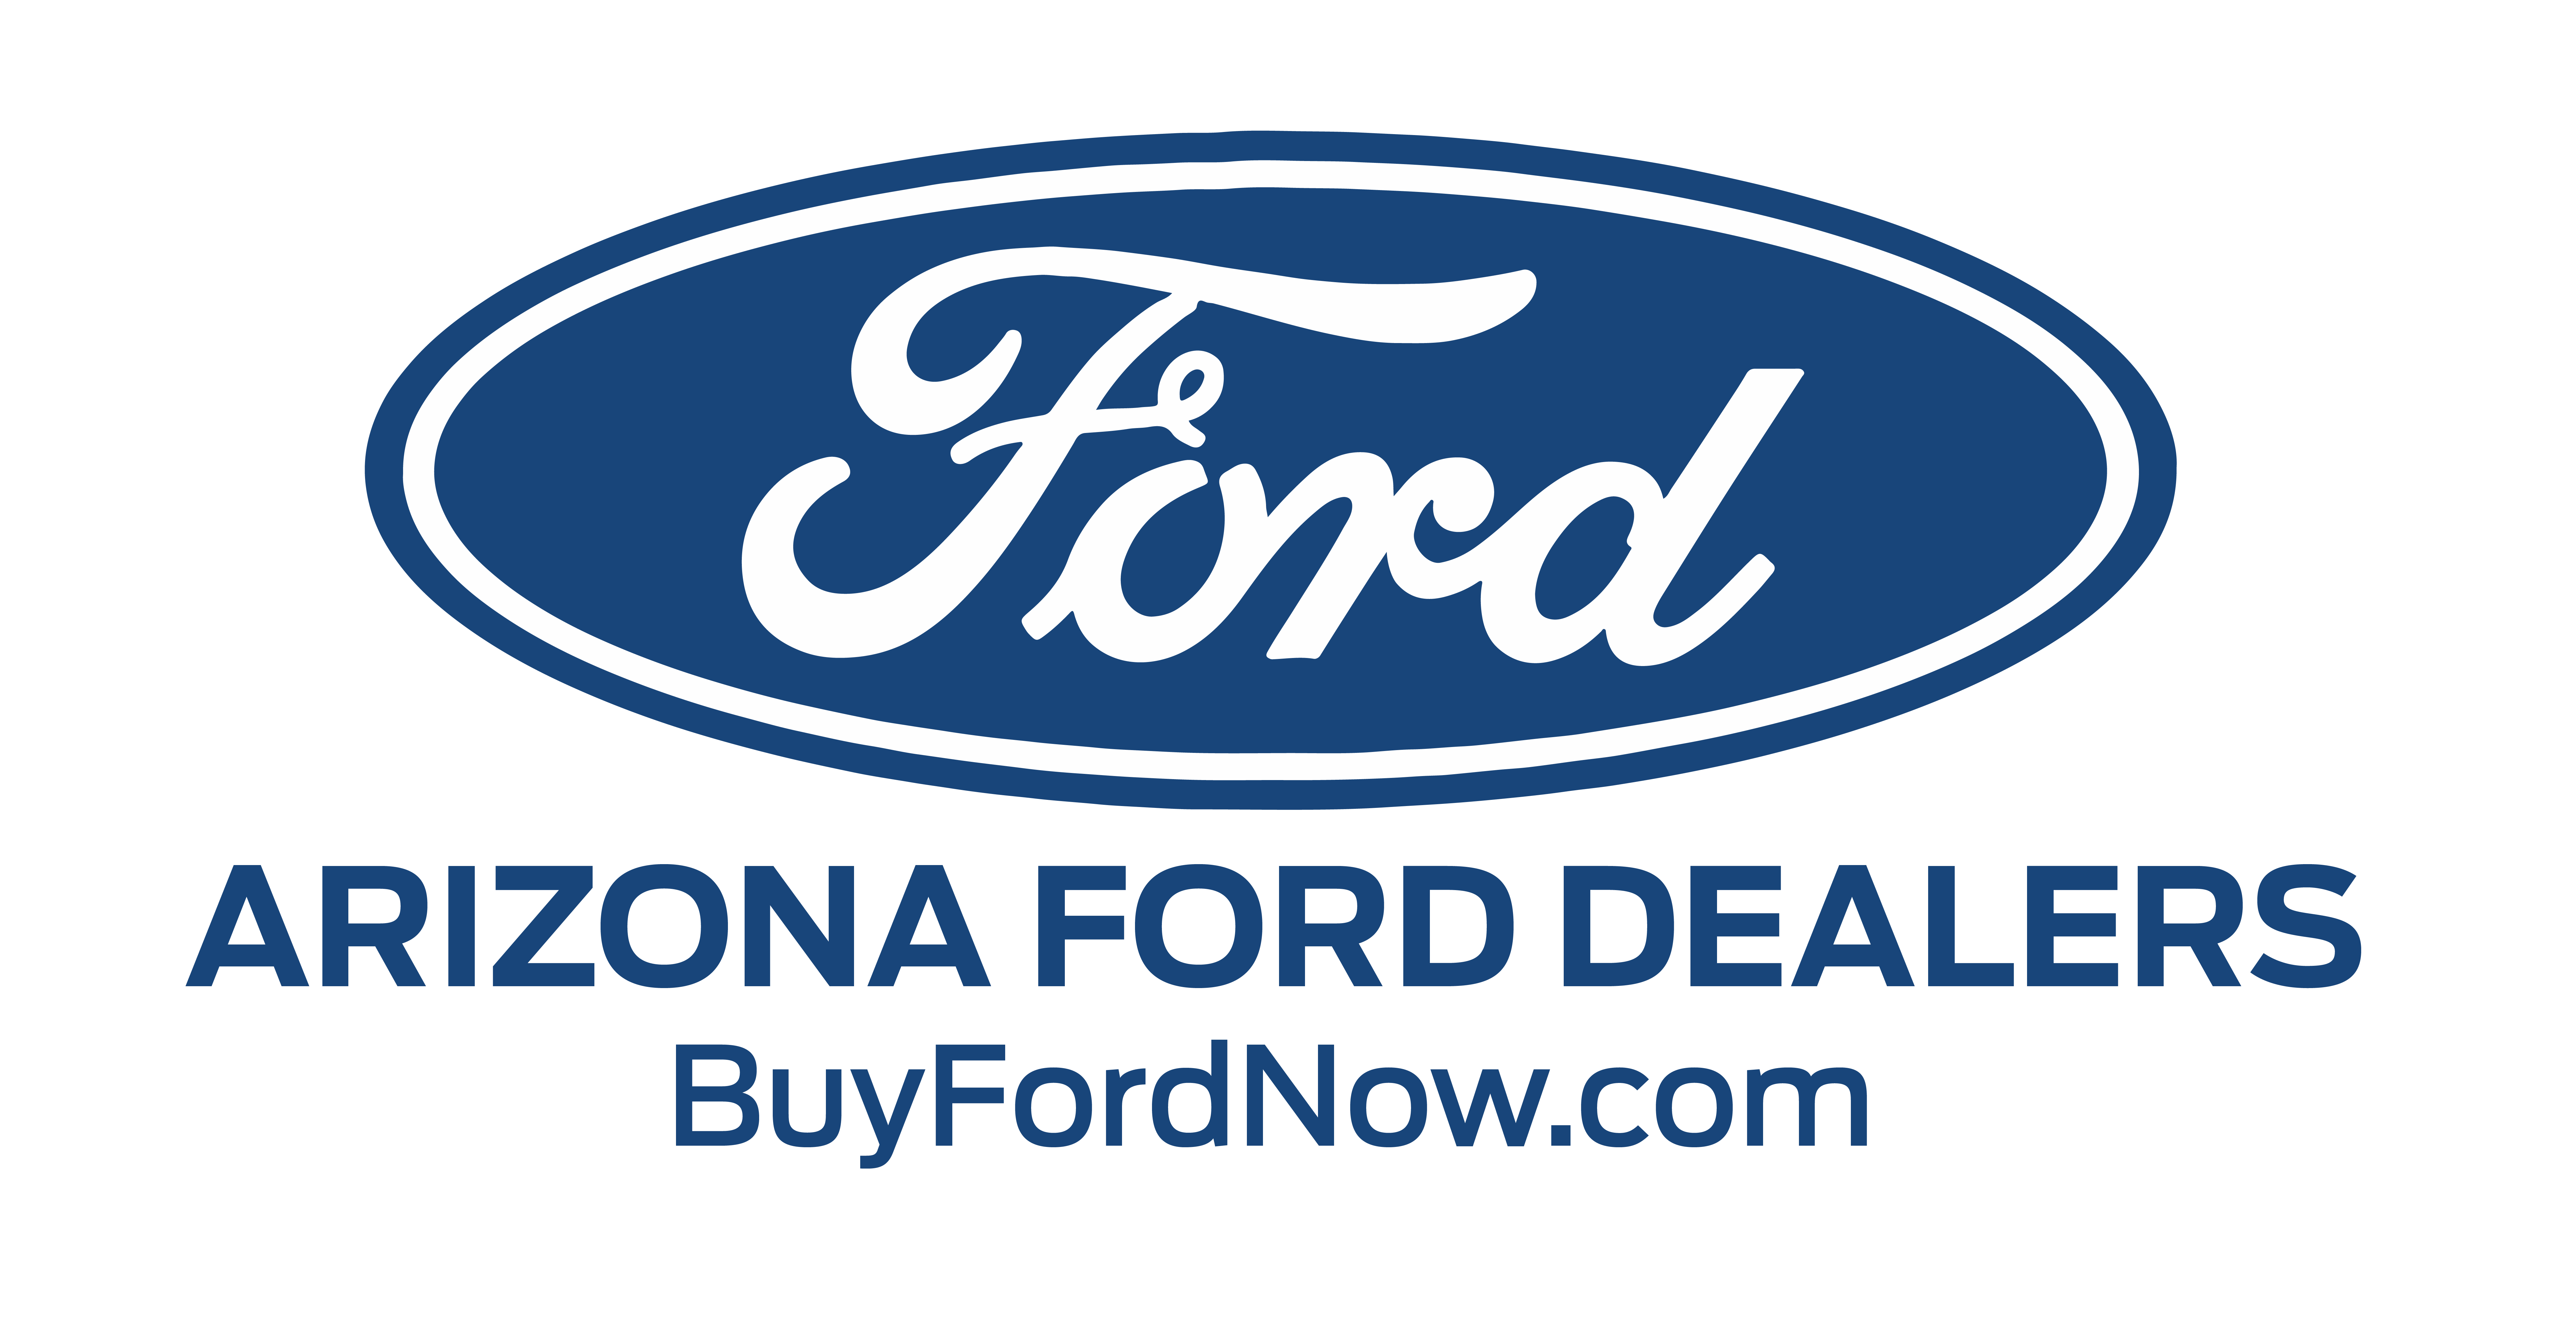 Arizona Ford Dealers logo